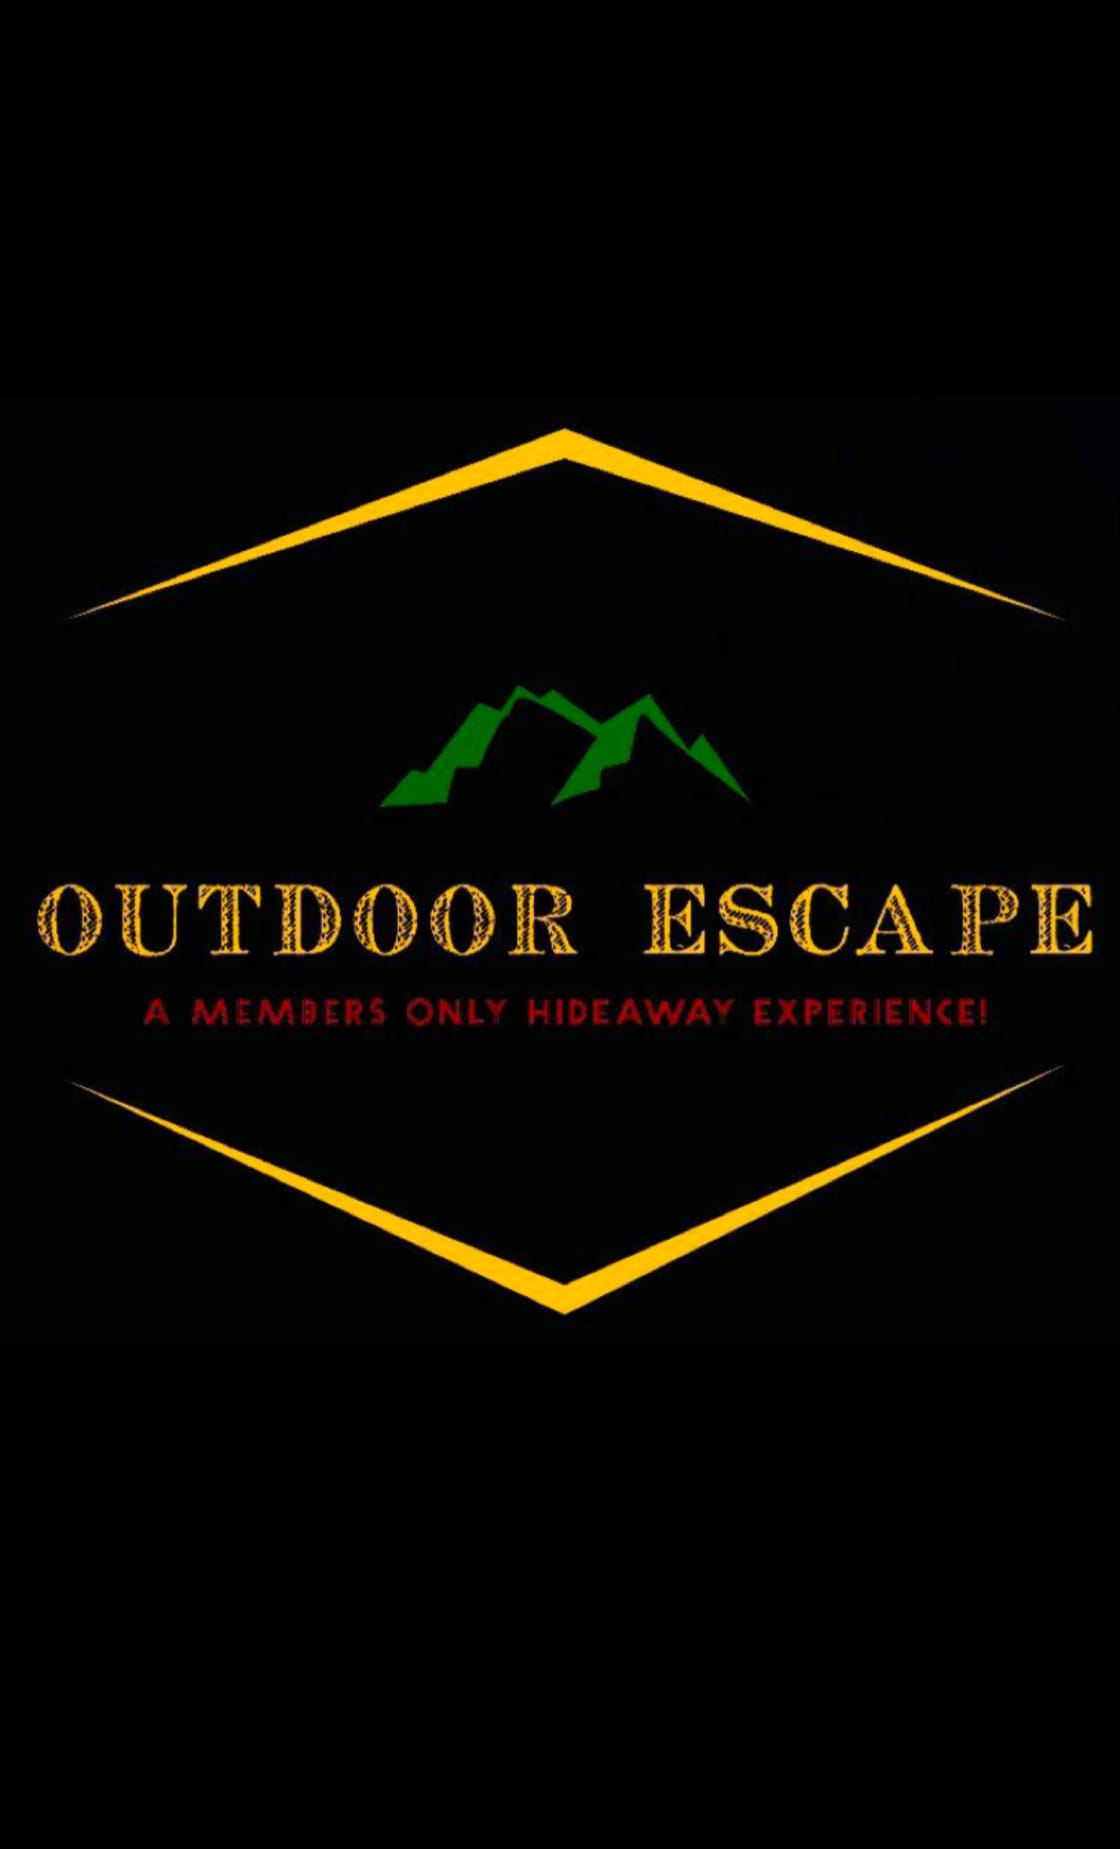 Outdoor Escape Experience